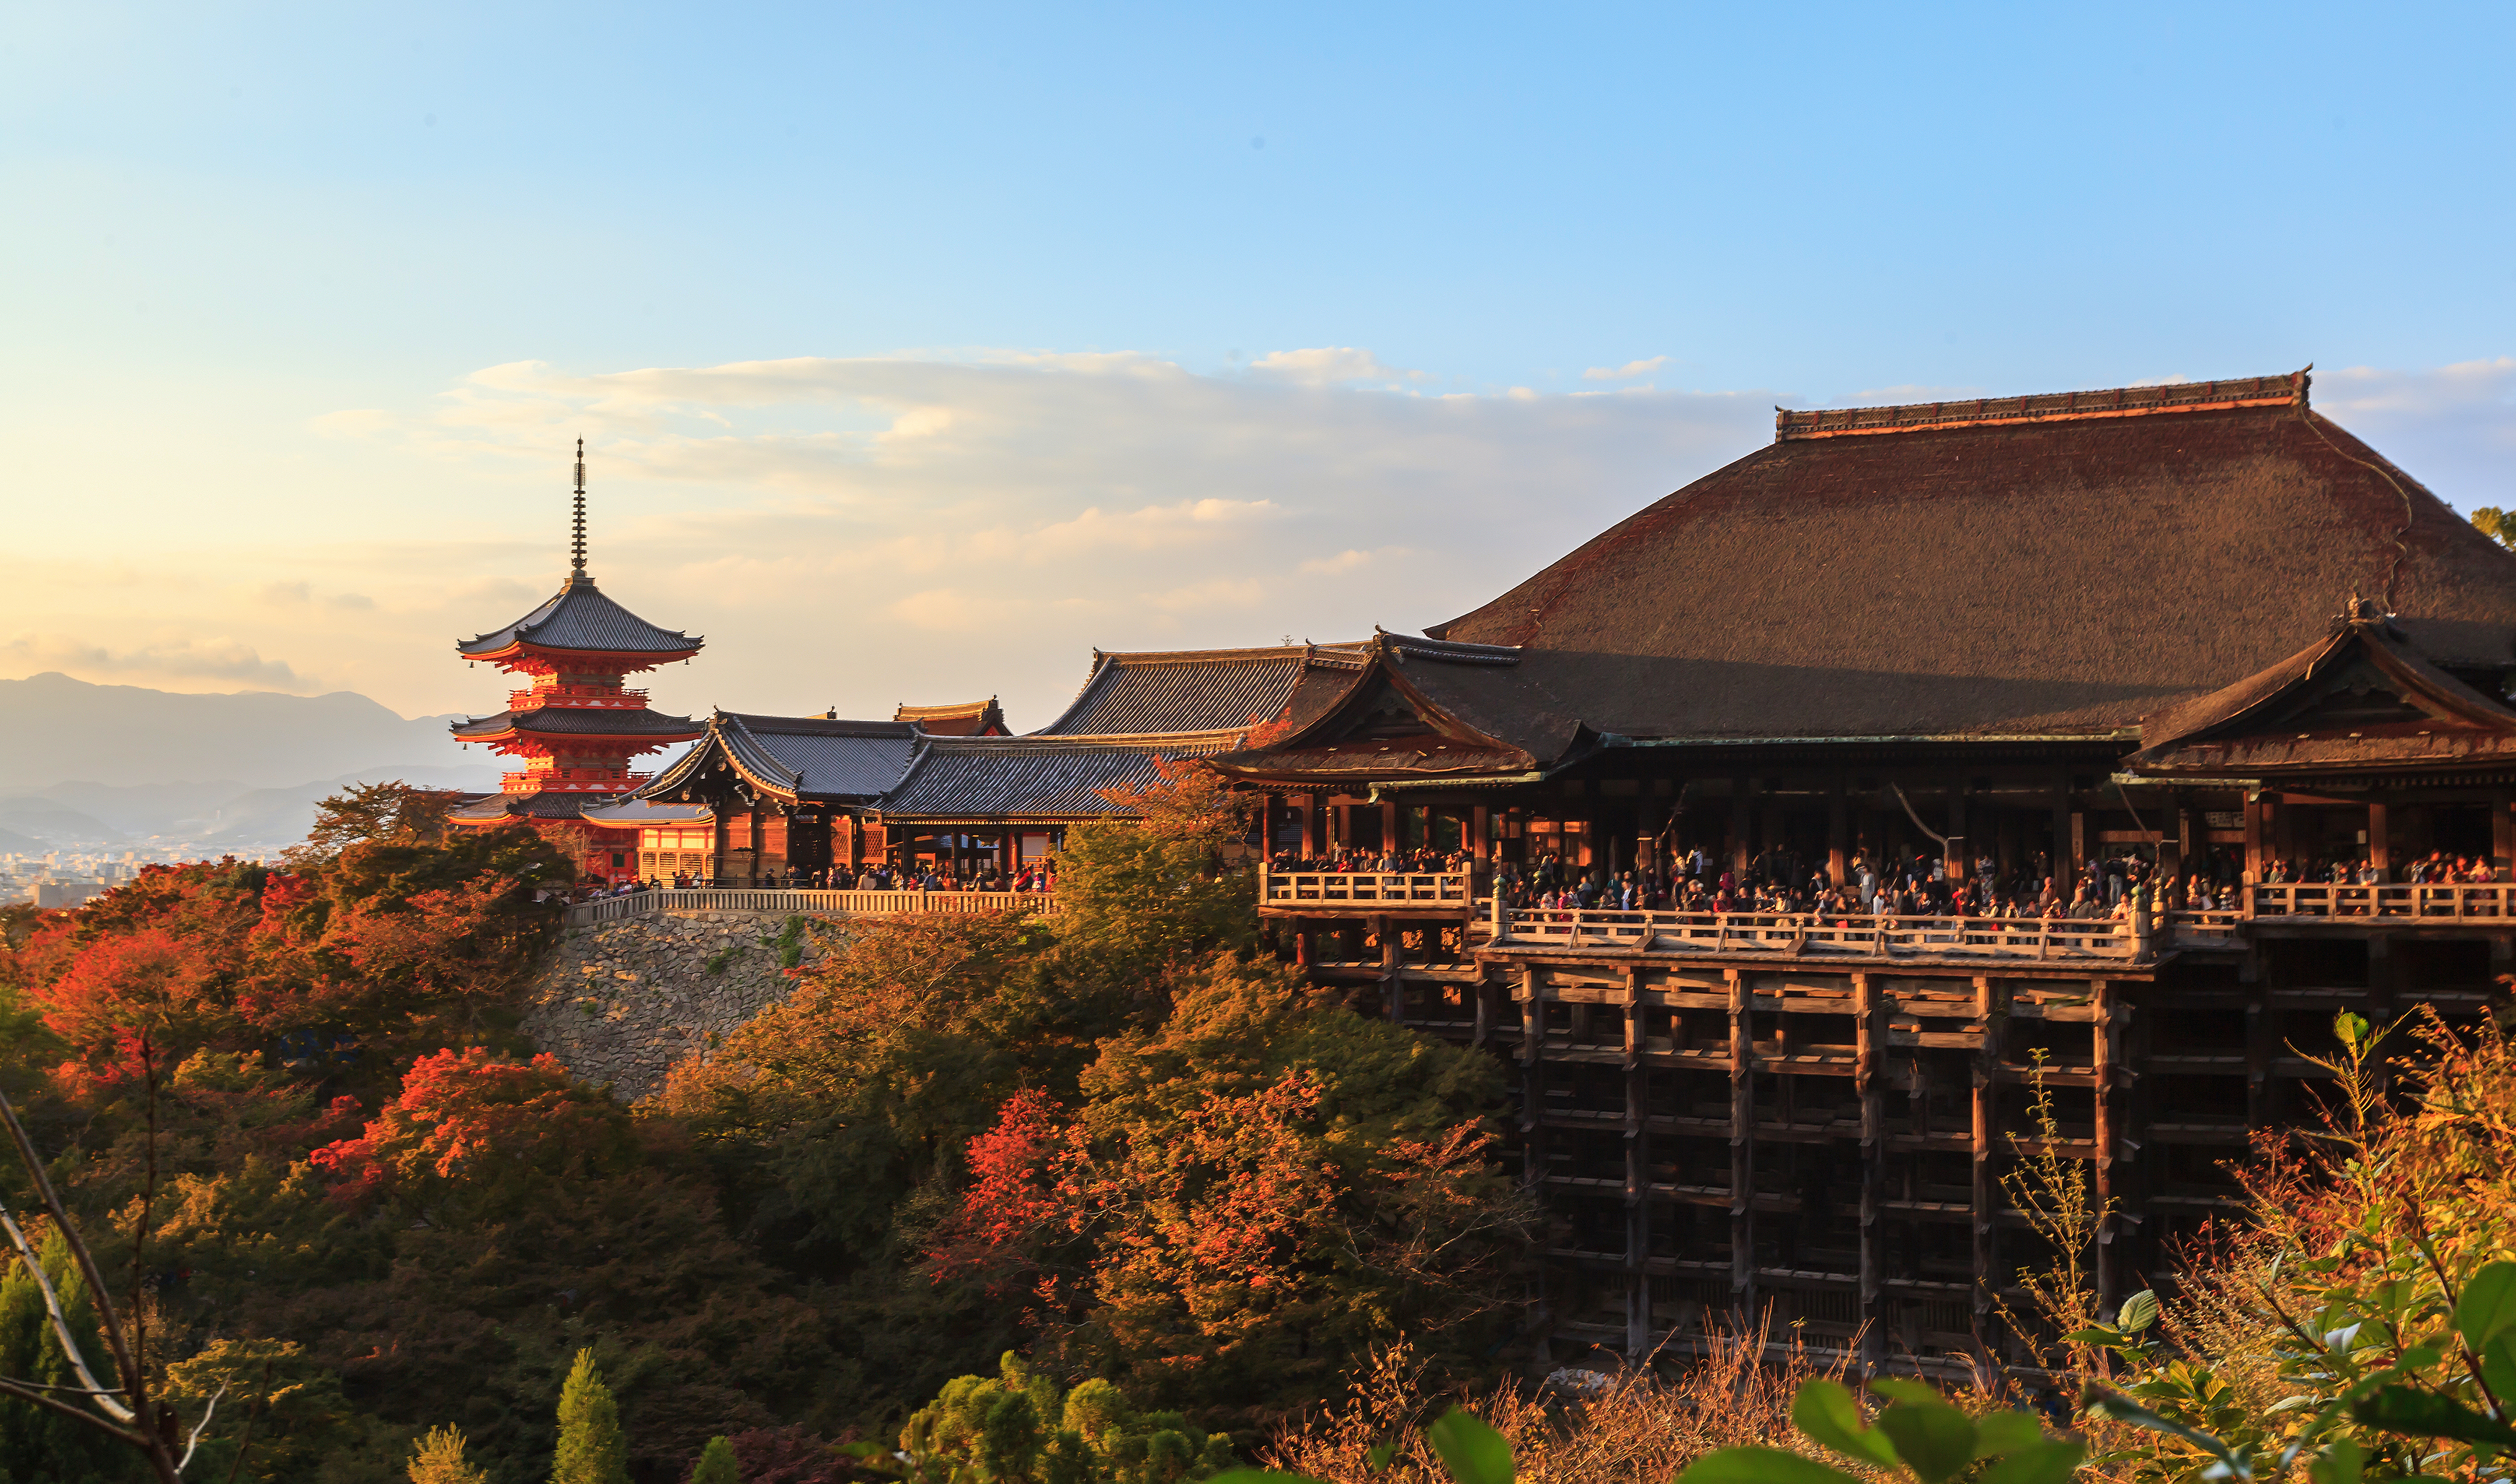 Landscape,Of,Kiyomizu Dera,Ancient,Temple,At,Sunset,During,Autumn,Season,